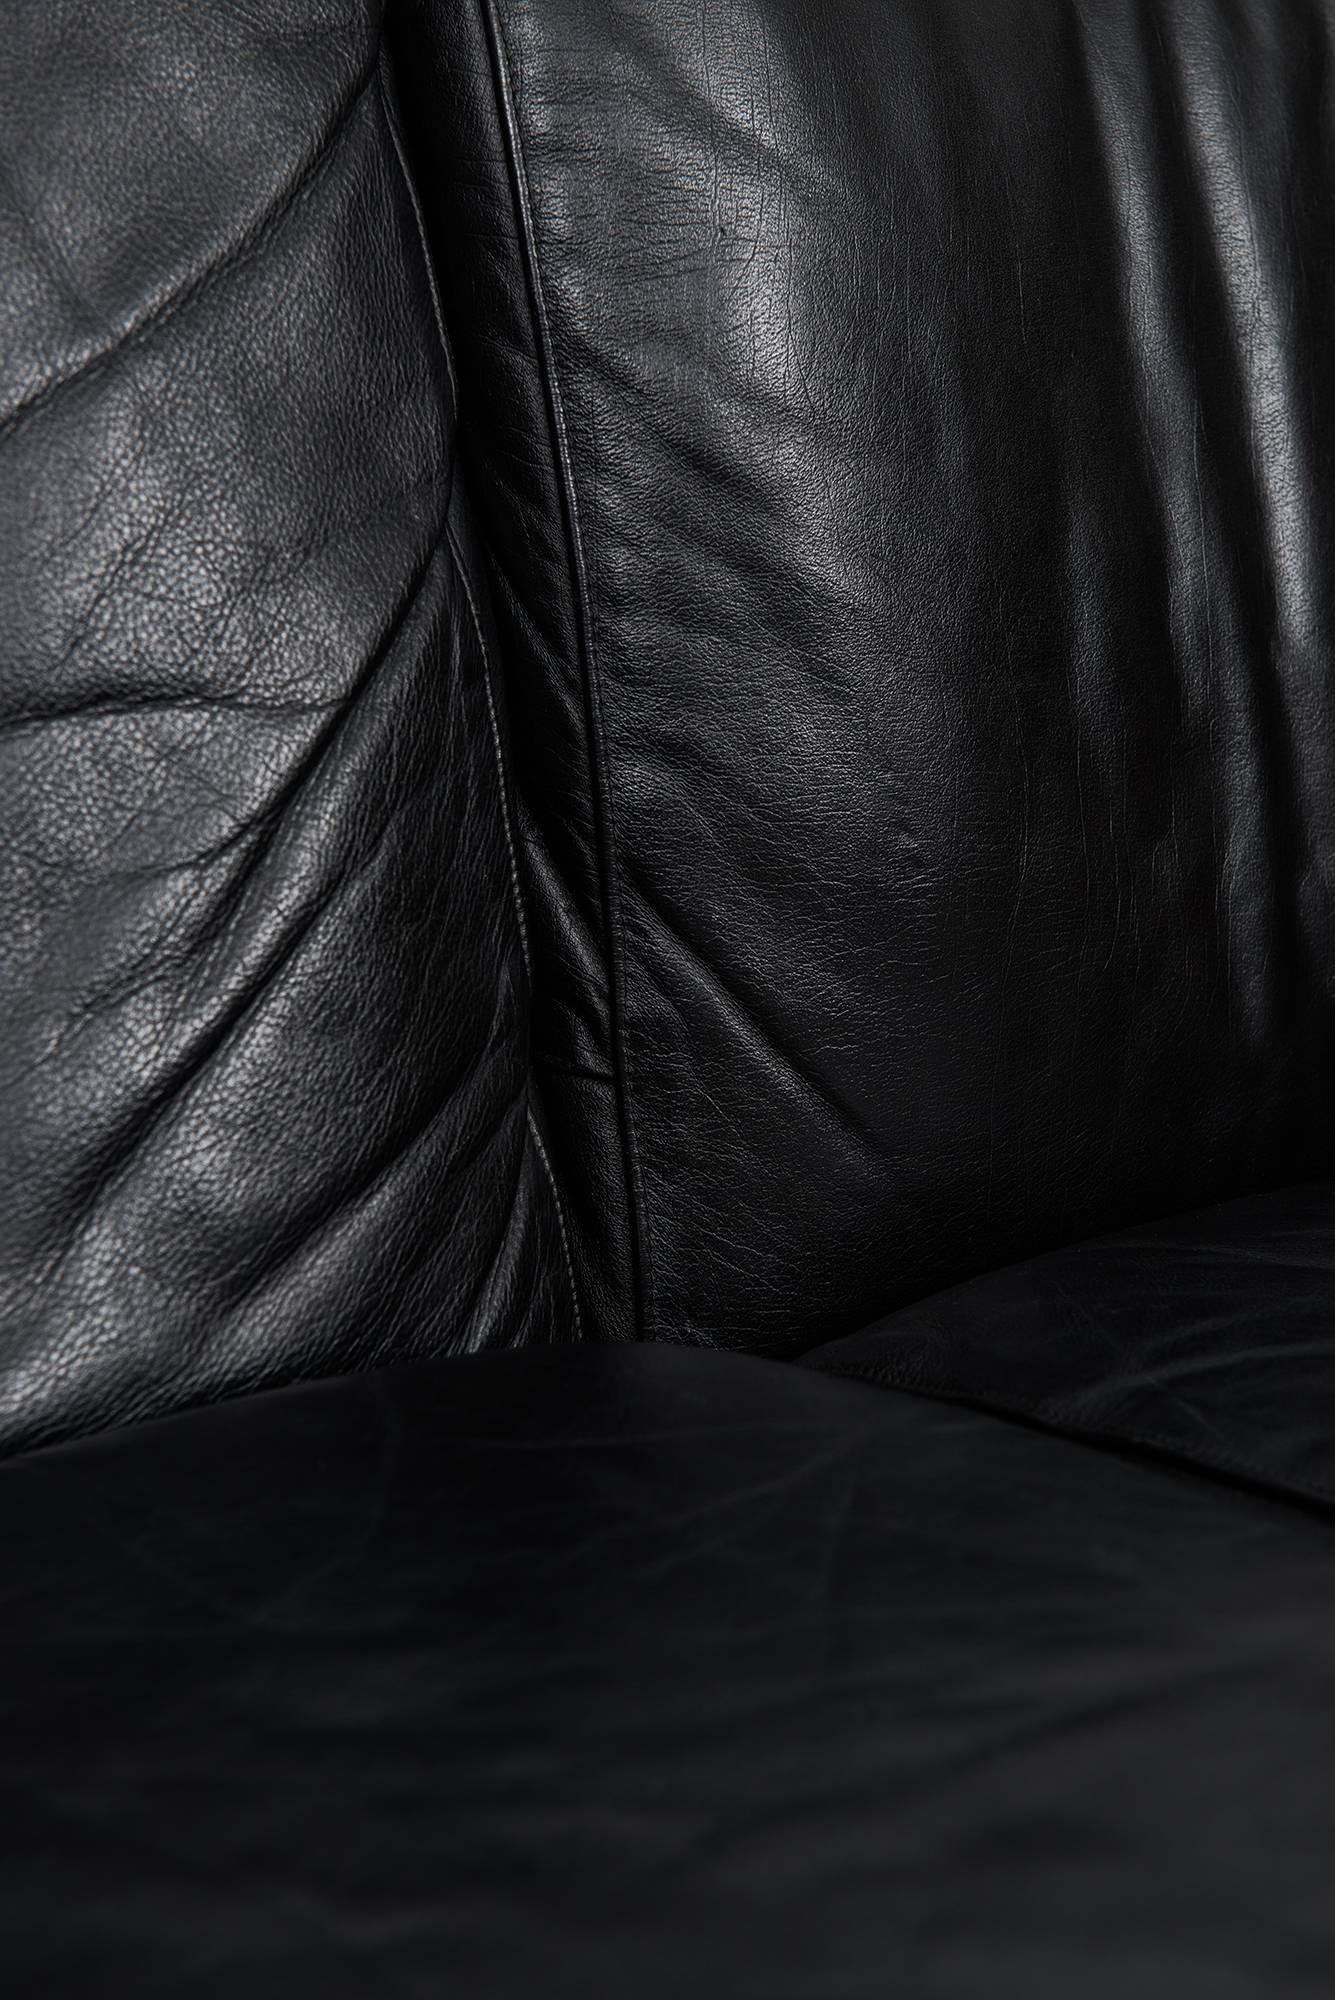 Rare long sofa designed by Peter Opsvik. Produced by Bruksbo in Norway